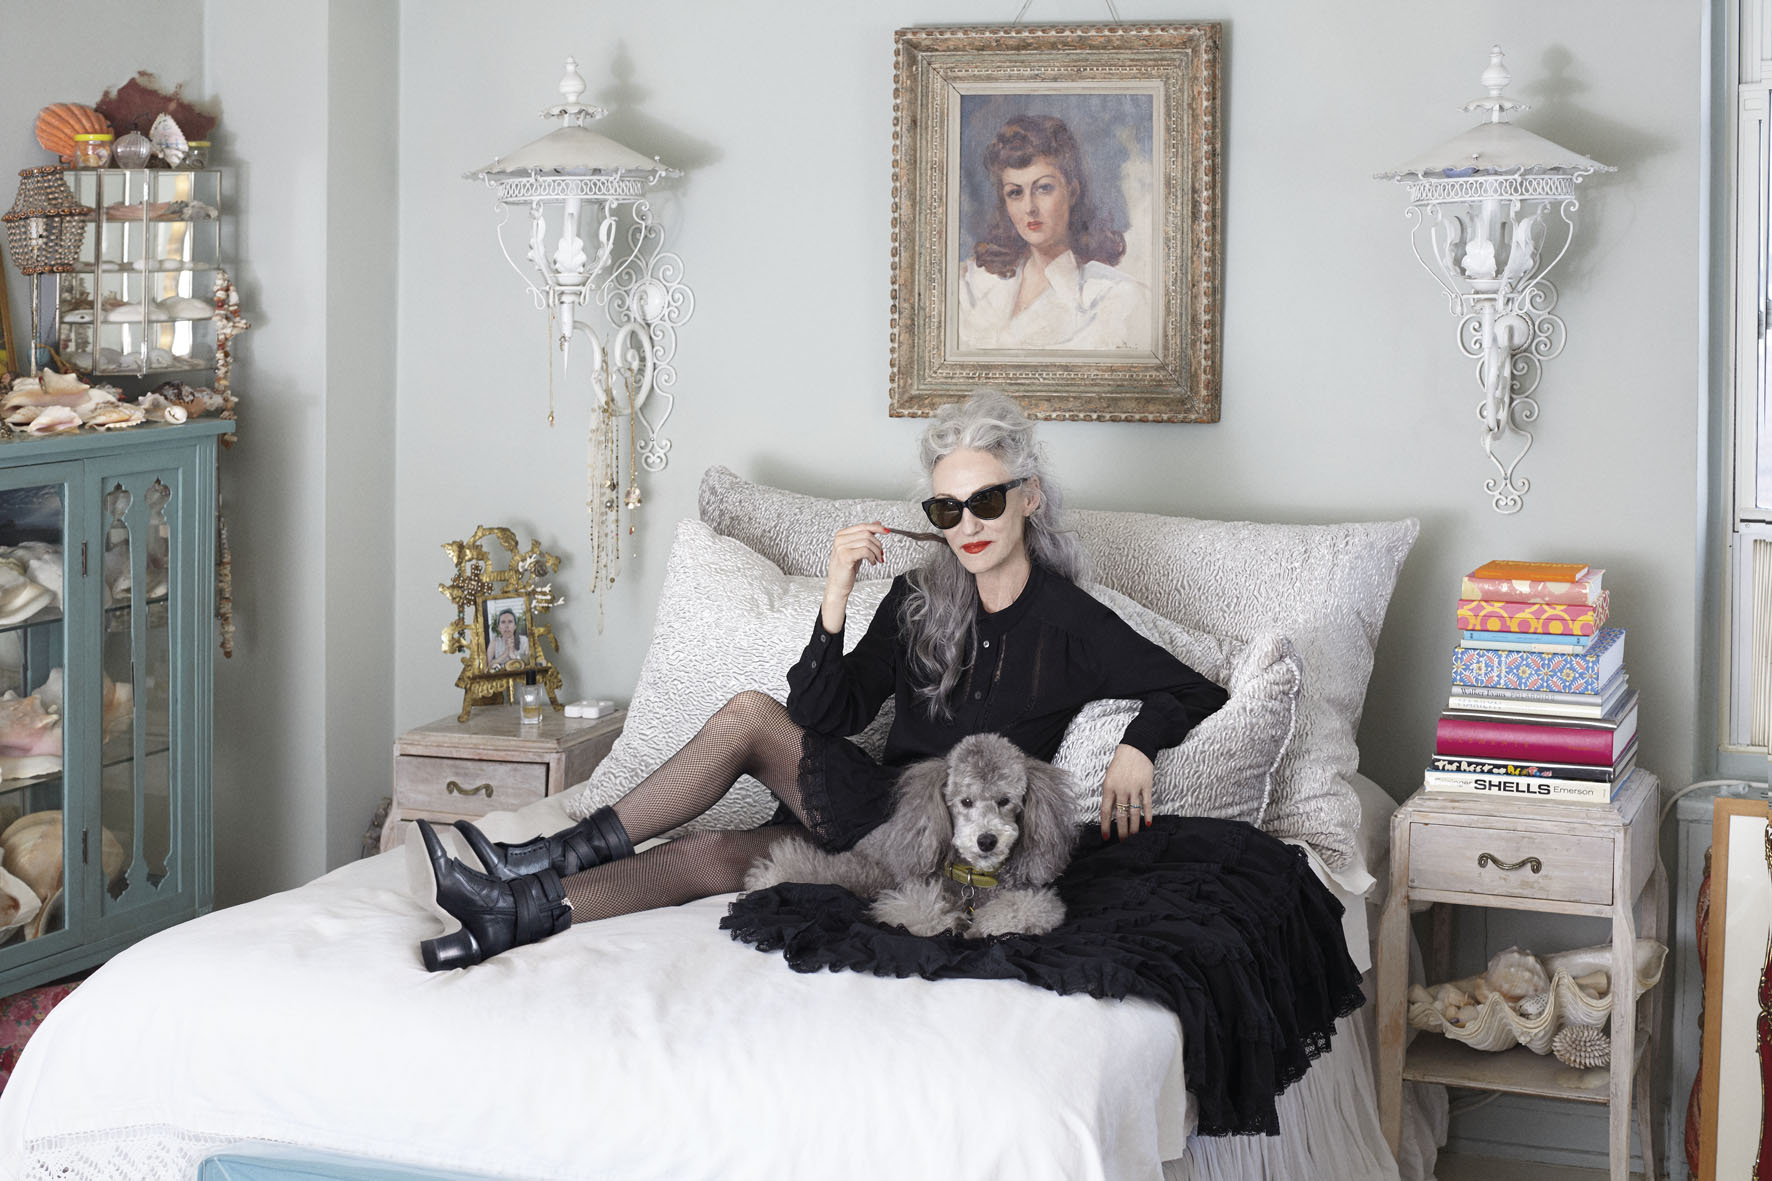 GREY 1.1 Fall 2014 “Linda Rodin” | Ari Seth Cohen | Grey Magazine | Valentina Ilardi Martin | Numerique Retouch Photo Retouching Studio